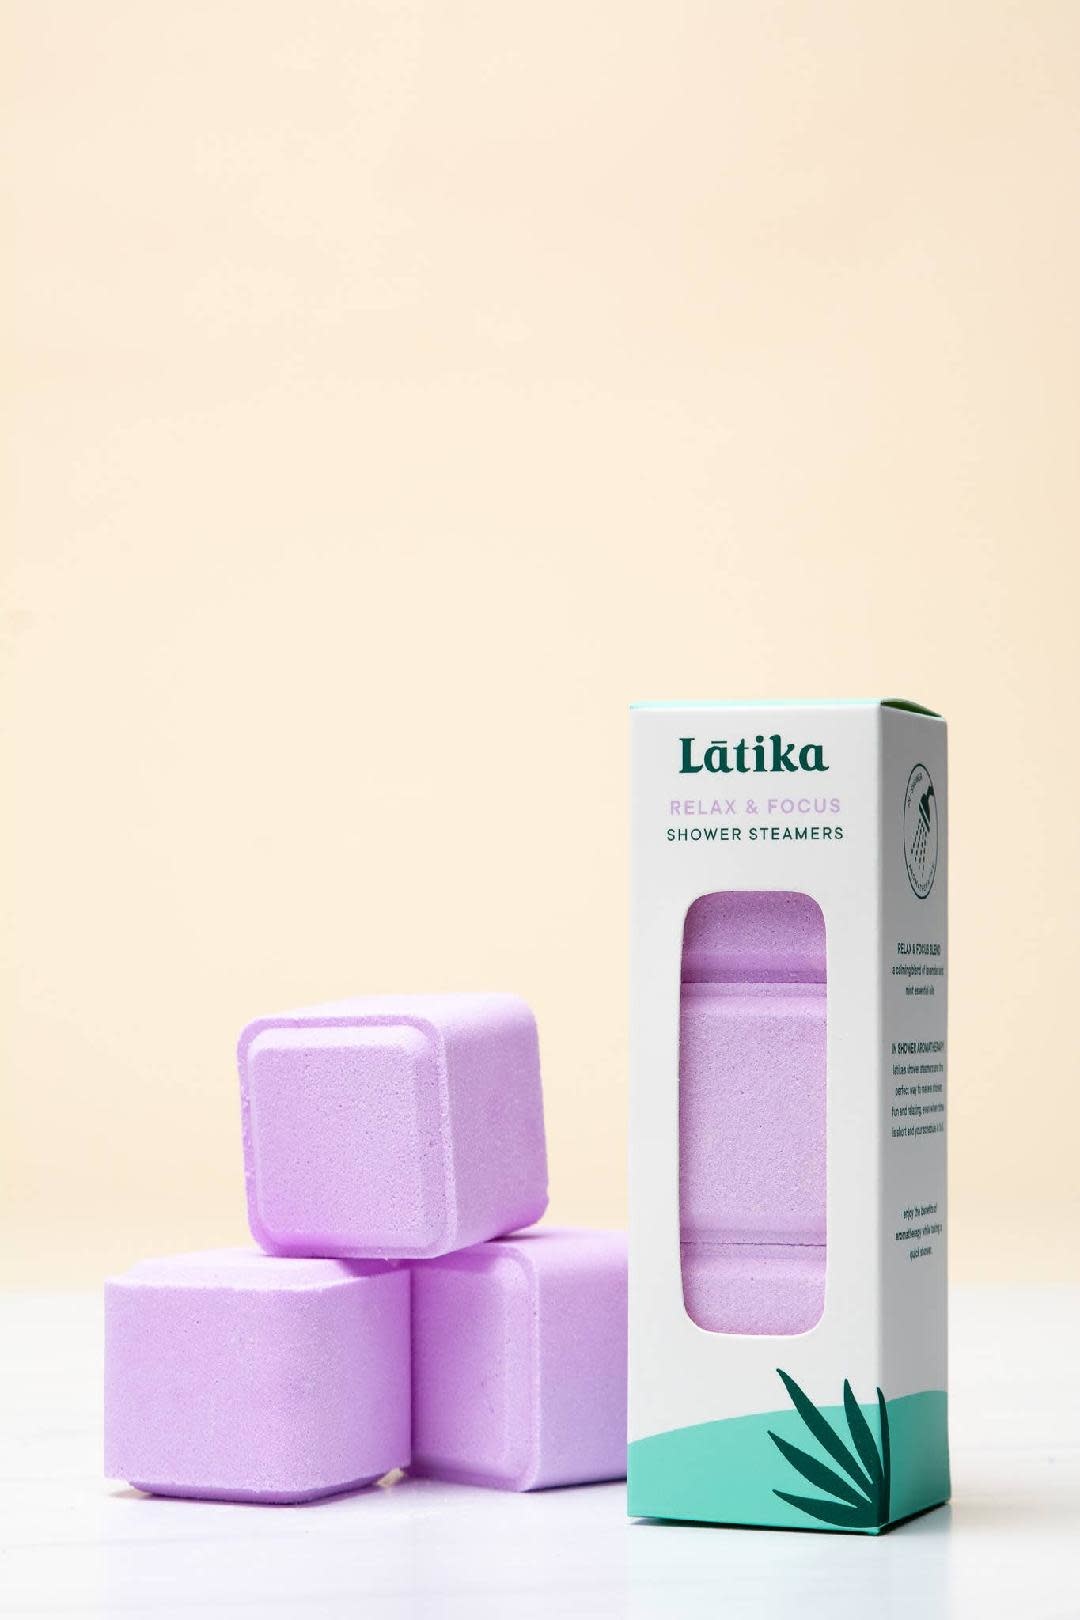 Latika Latika Shower Steamer Relax & Focus